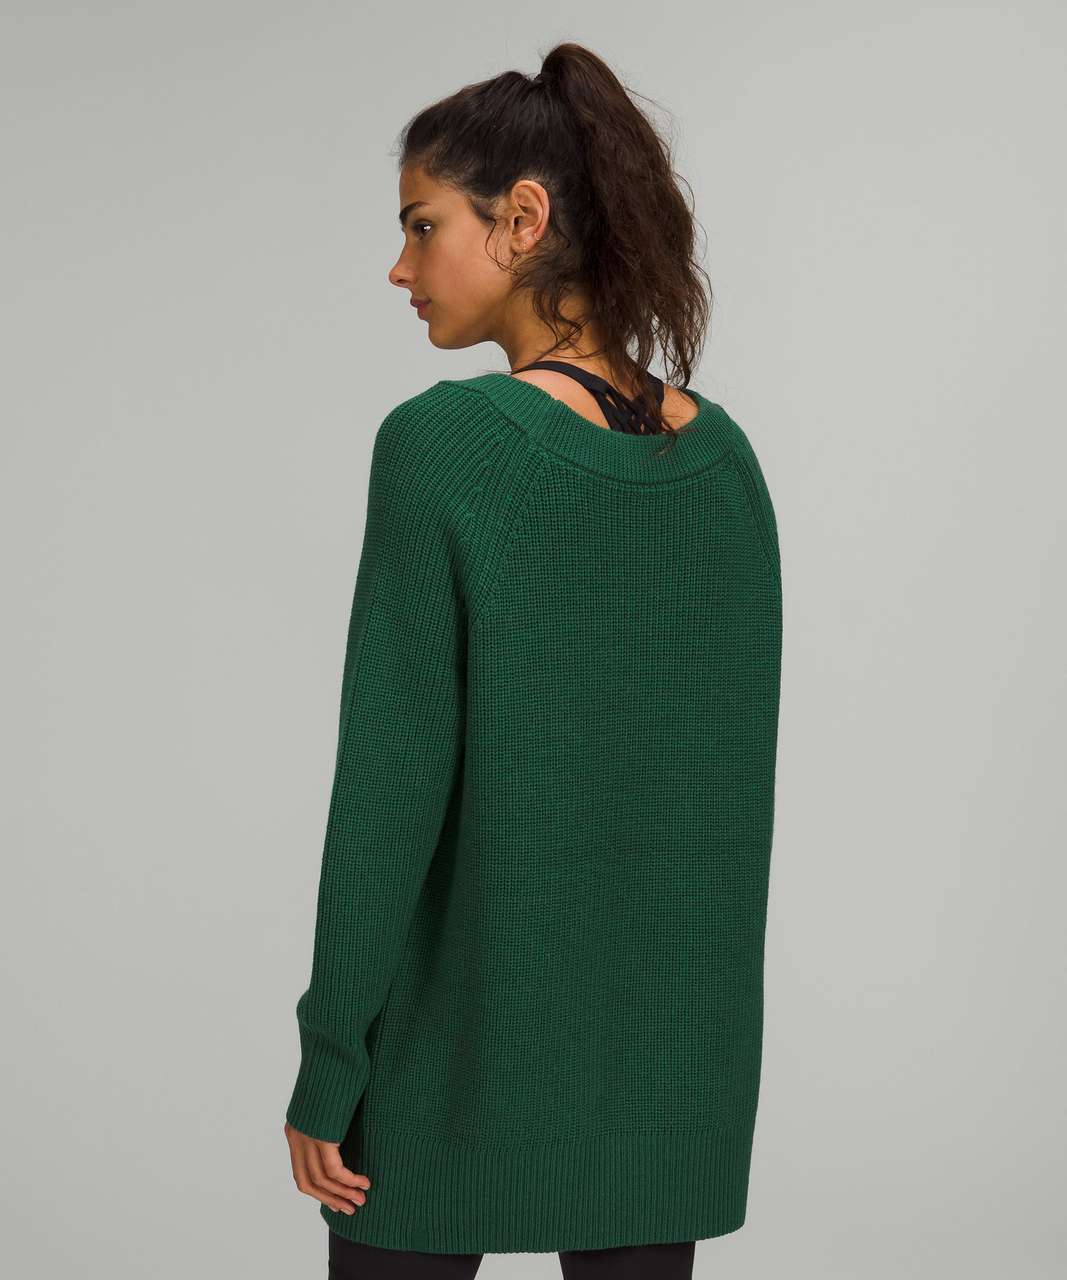 Lululemon Merino Wool Pullover Sweater - Heathered Everglade Green